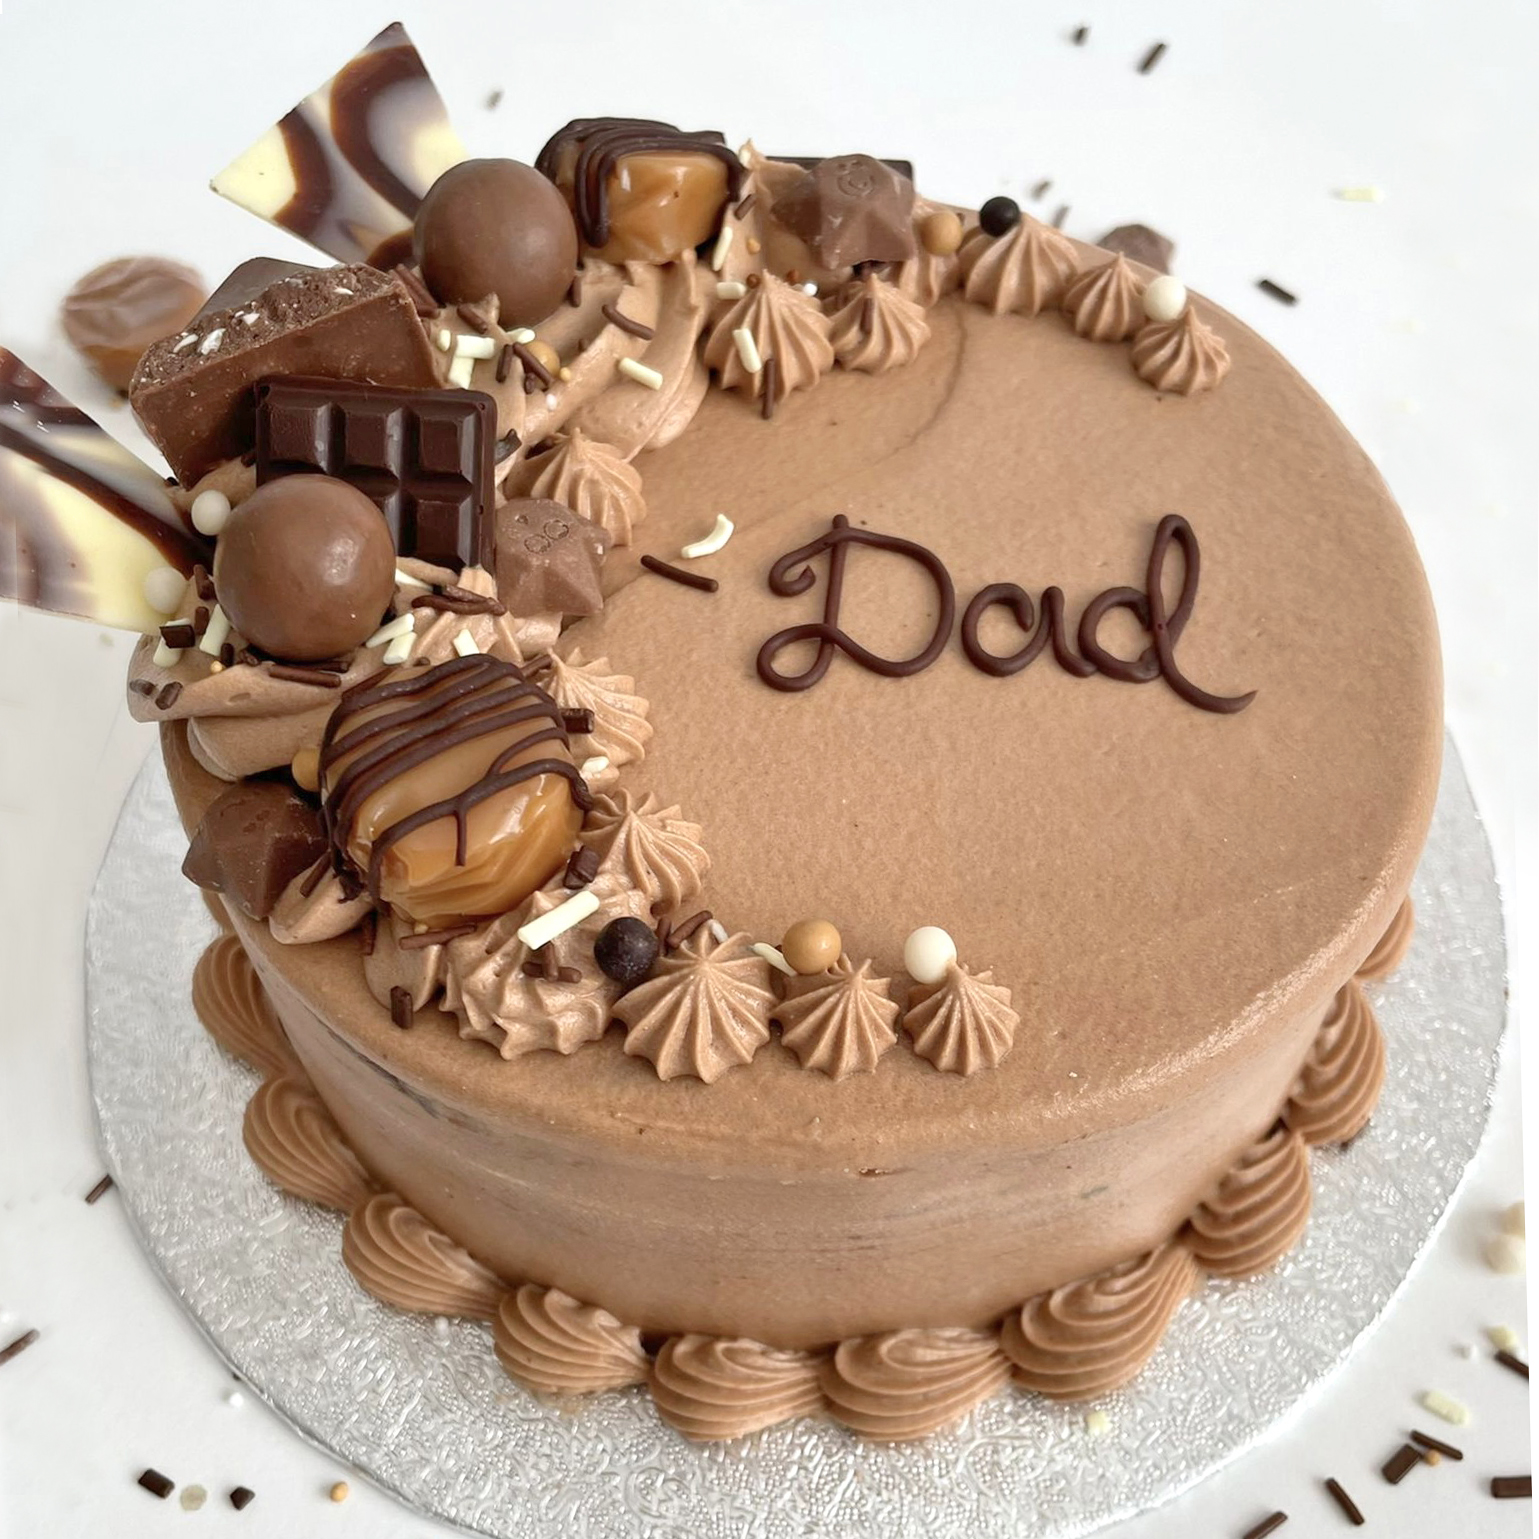 Kinder Bueno Chocolate Cake - Rabakes Cakes | Online Birthday Cake Delivery  | Cake Booking Online UK